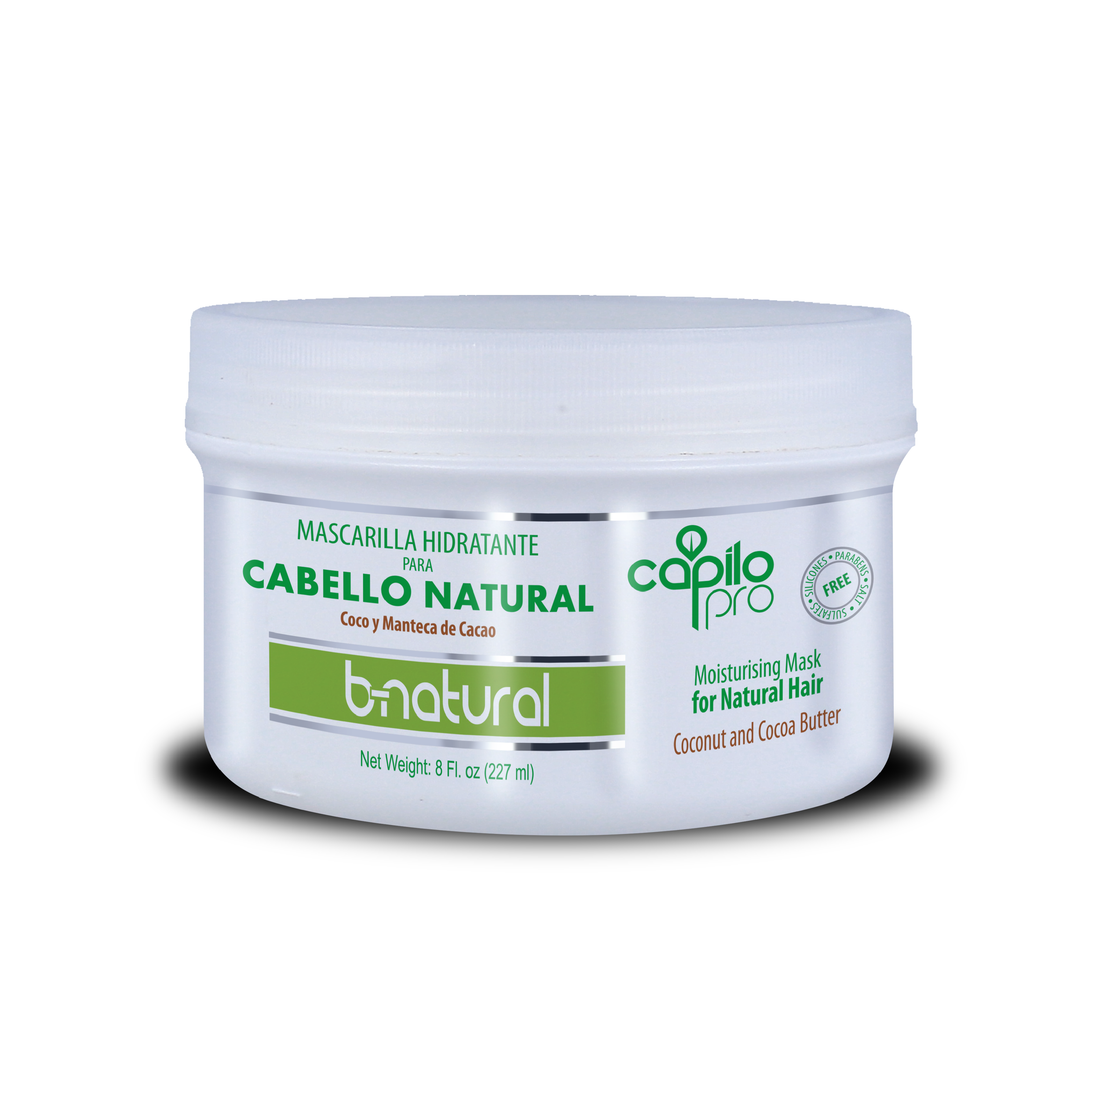 Capilo Pro B-Natural Hair Mask